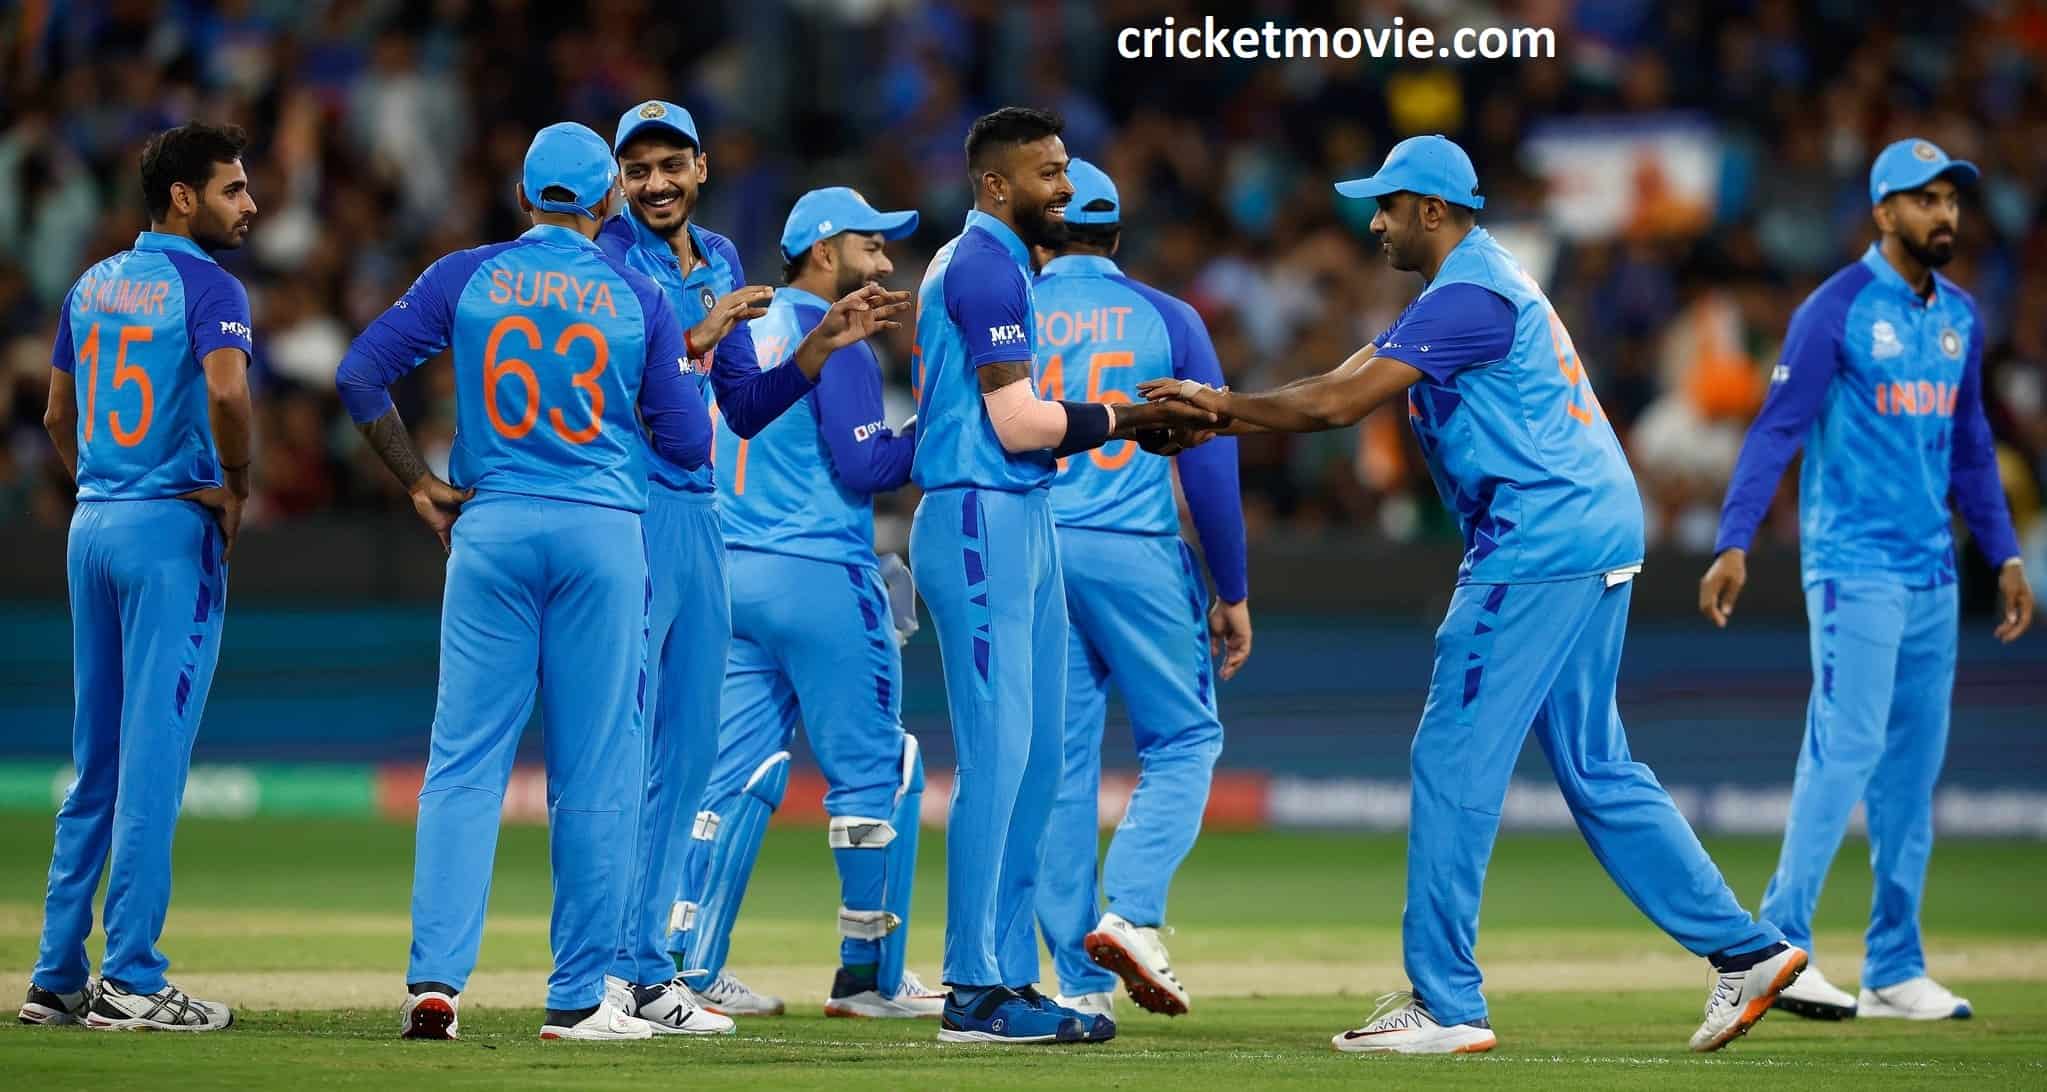 India beat Zimbabwe by 71 runs-cricketmovie.com